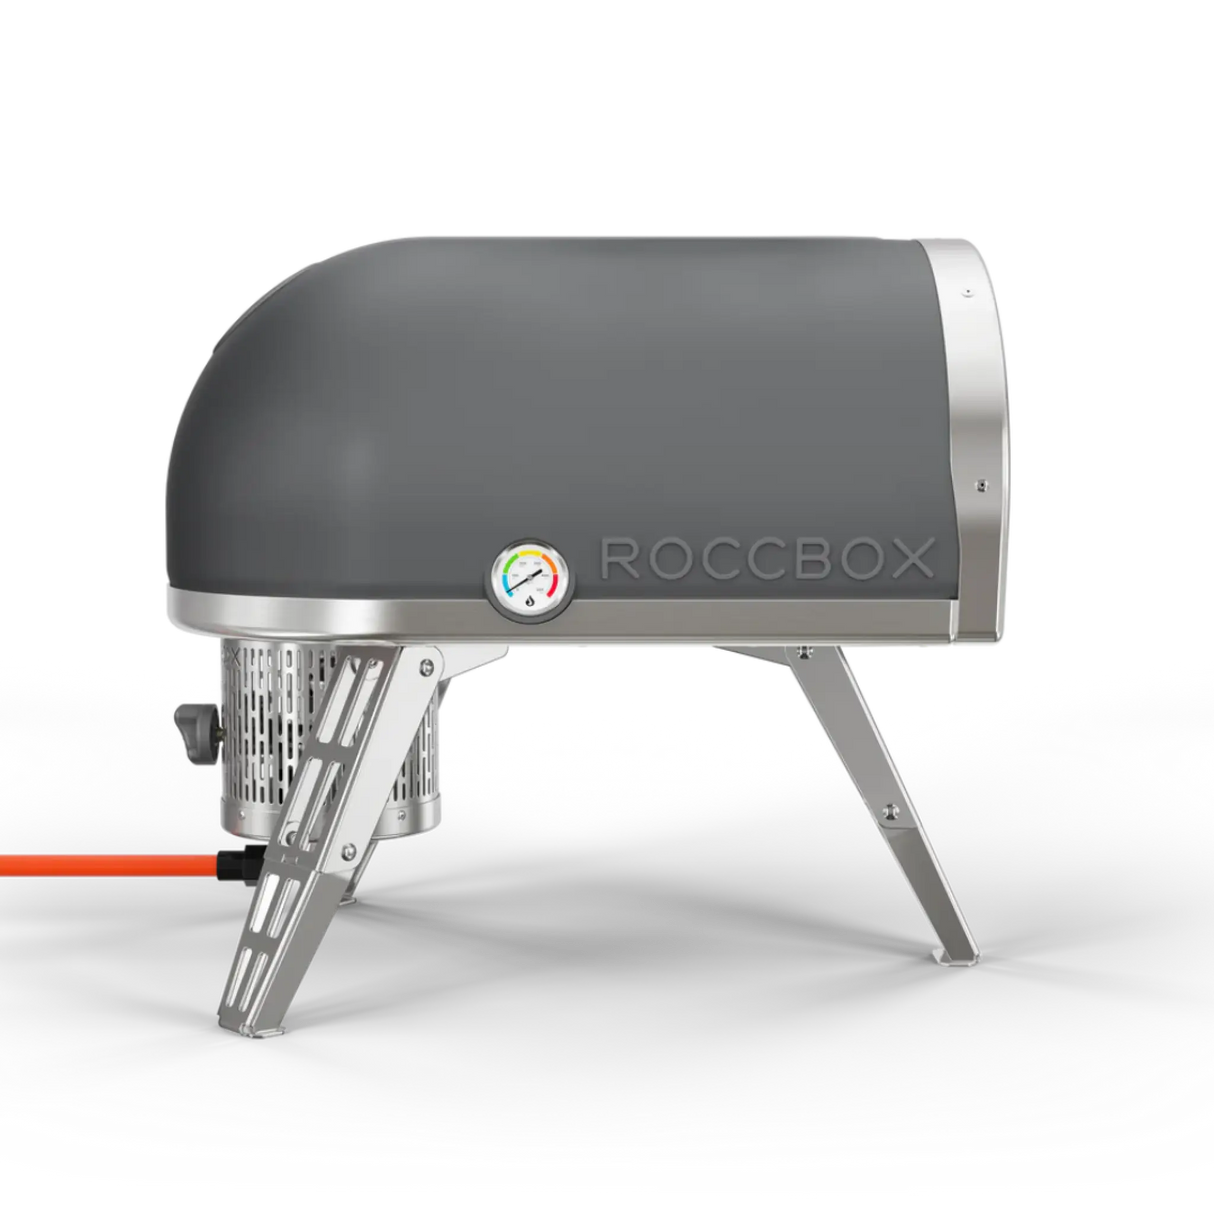 Gozney Roccbox Portable Gas Burning Pizza Oven